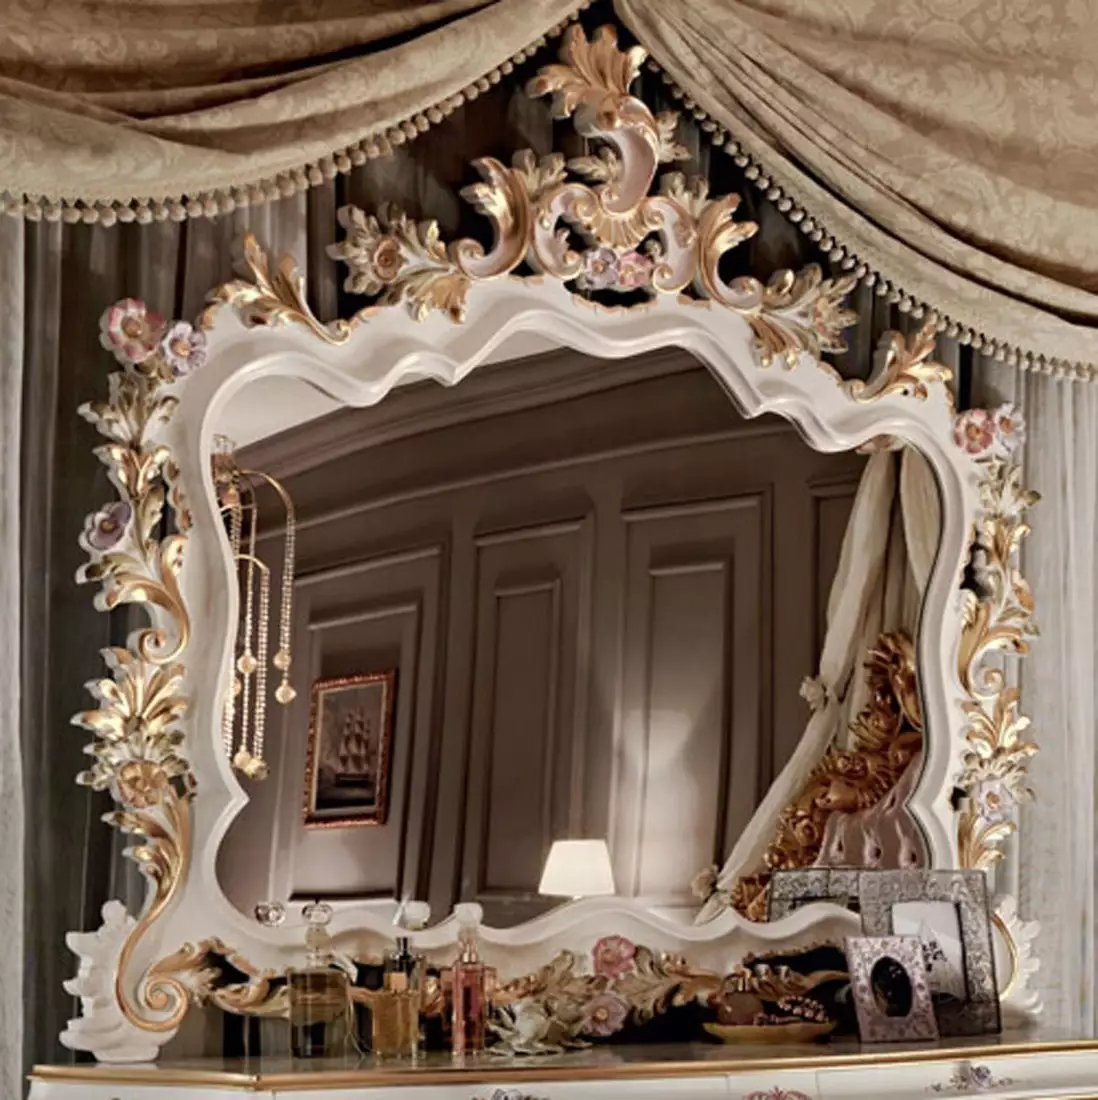 Figured-mirror-hardwood-dresser-painting-Villa-Venezia-collection-Modenese-Gastone_auto_x2